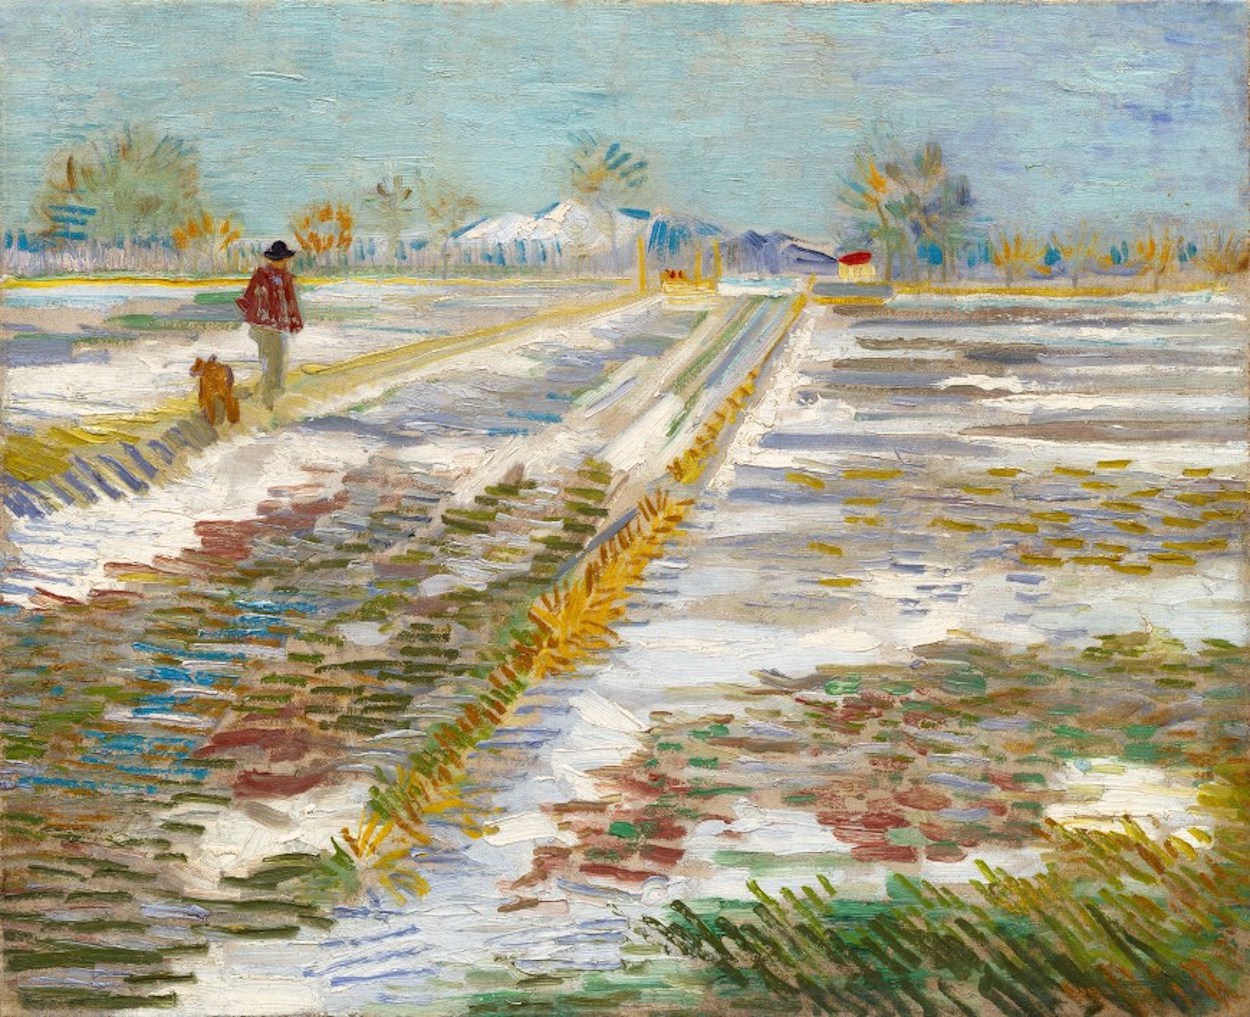 Paisaje con nieve by Vincent van Gogh - 1888 Museo Solomon R. Guggenheim